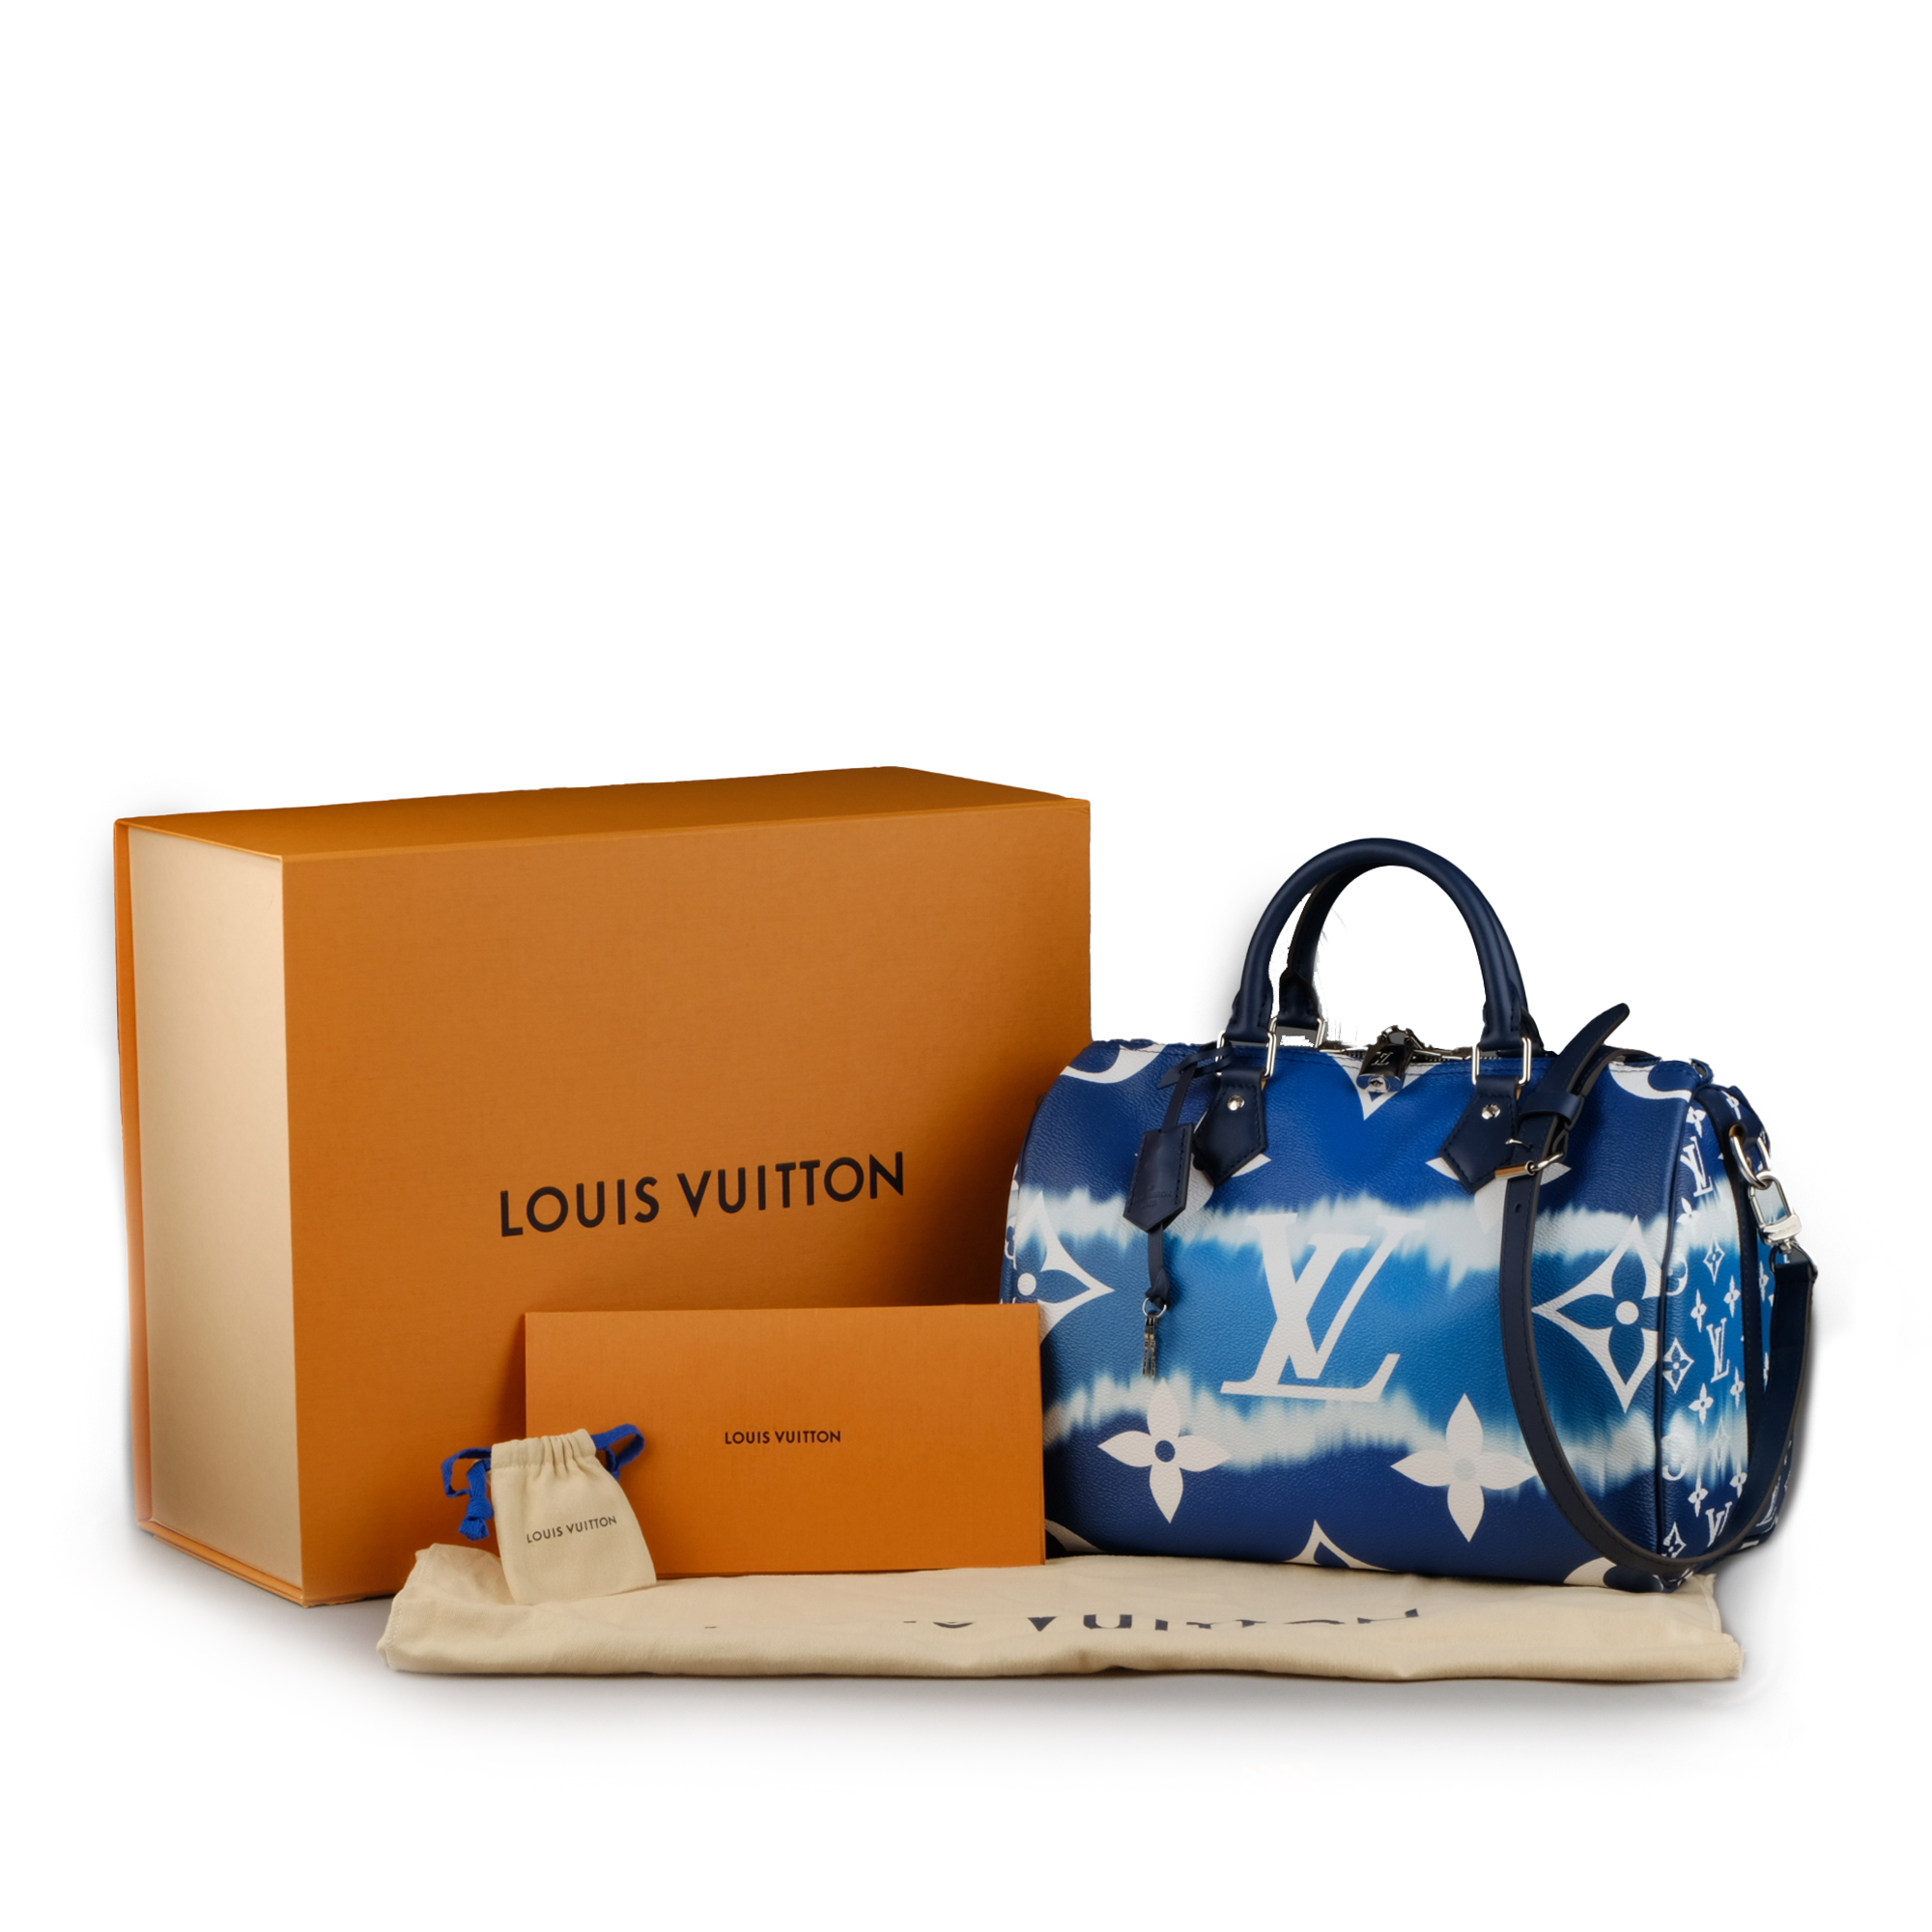 Louis Vuitton AUTHENTIC SPEEDY 30 PINK ESCALE GIANT FLOWER MONOGRAM PASTEL  BAG